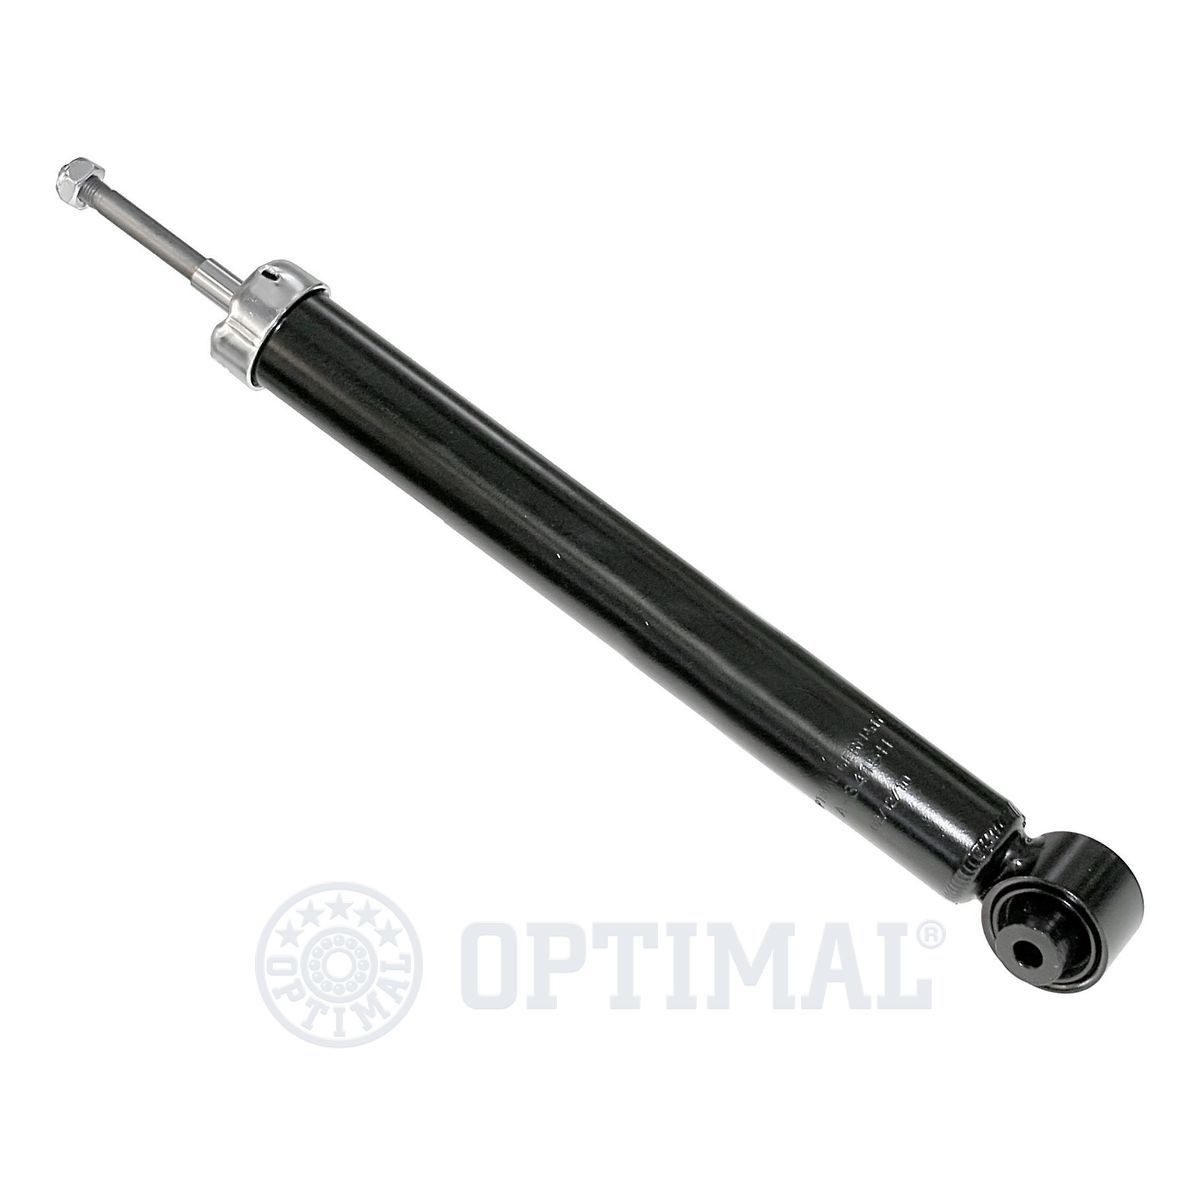 OPTIMAL A-3415H Shock absorber Rear Axle, Oil Pressure, Telescopic Shock Absorber, Bottom eye, Top pin, M10x1,25